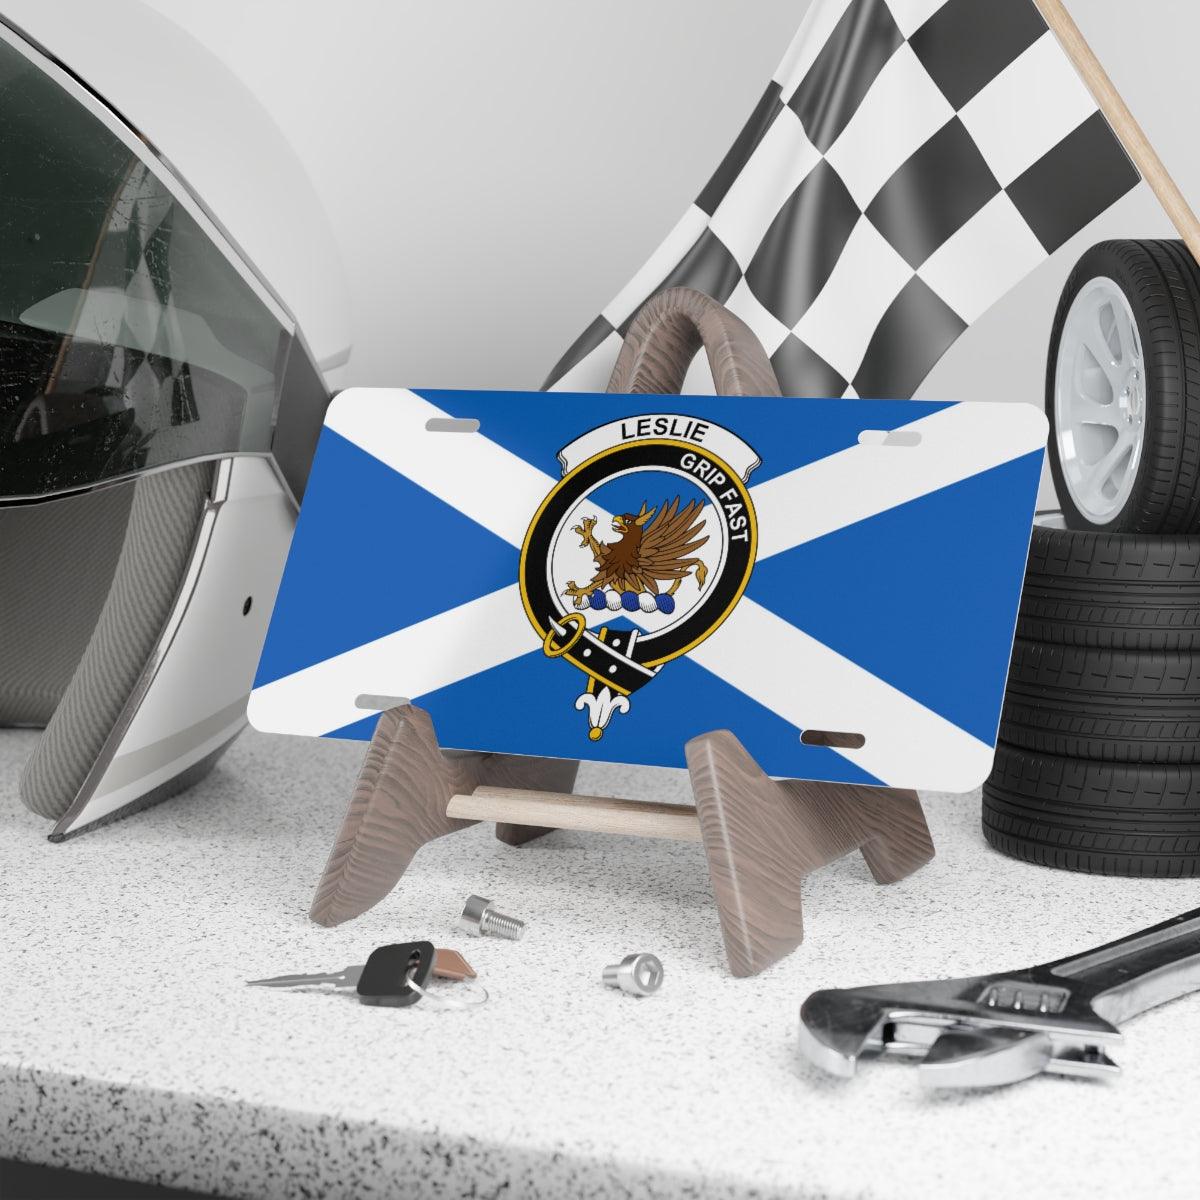 Leslie Clan Scottish Flag Novelty License Plate, Scottish Flag Plate